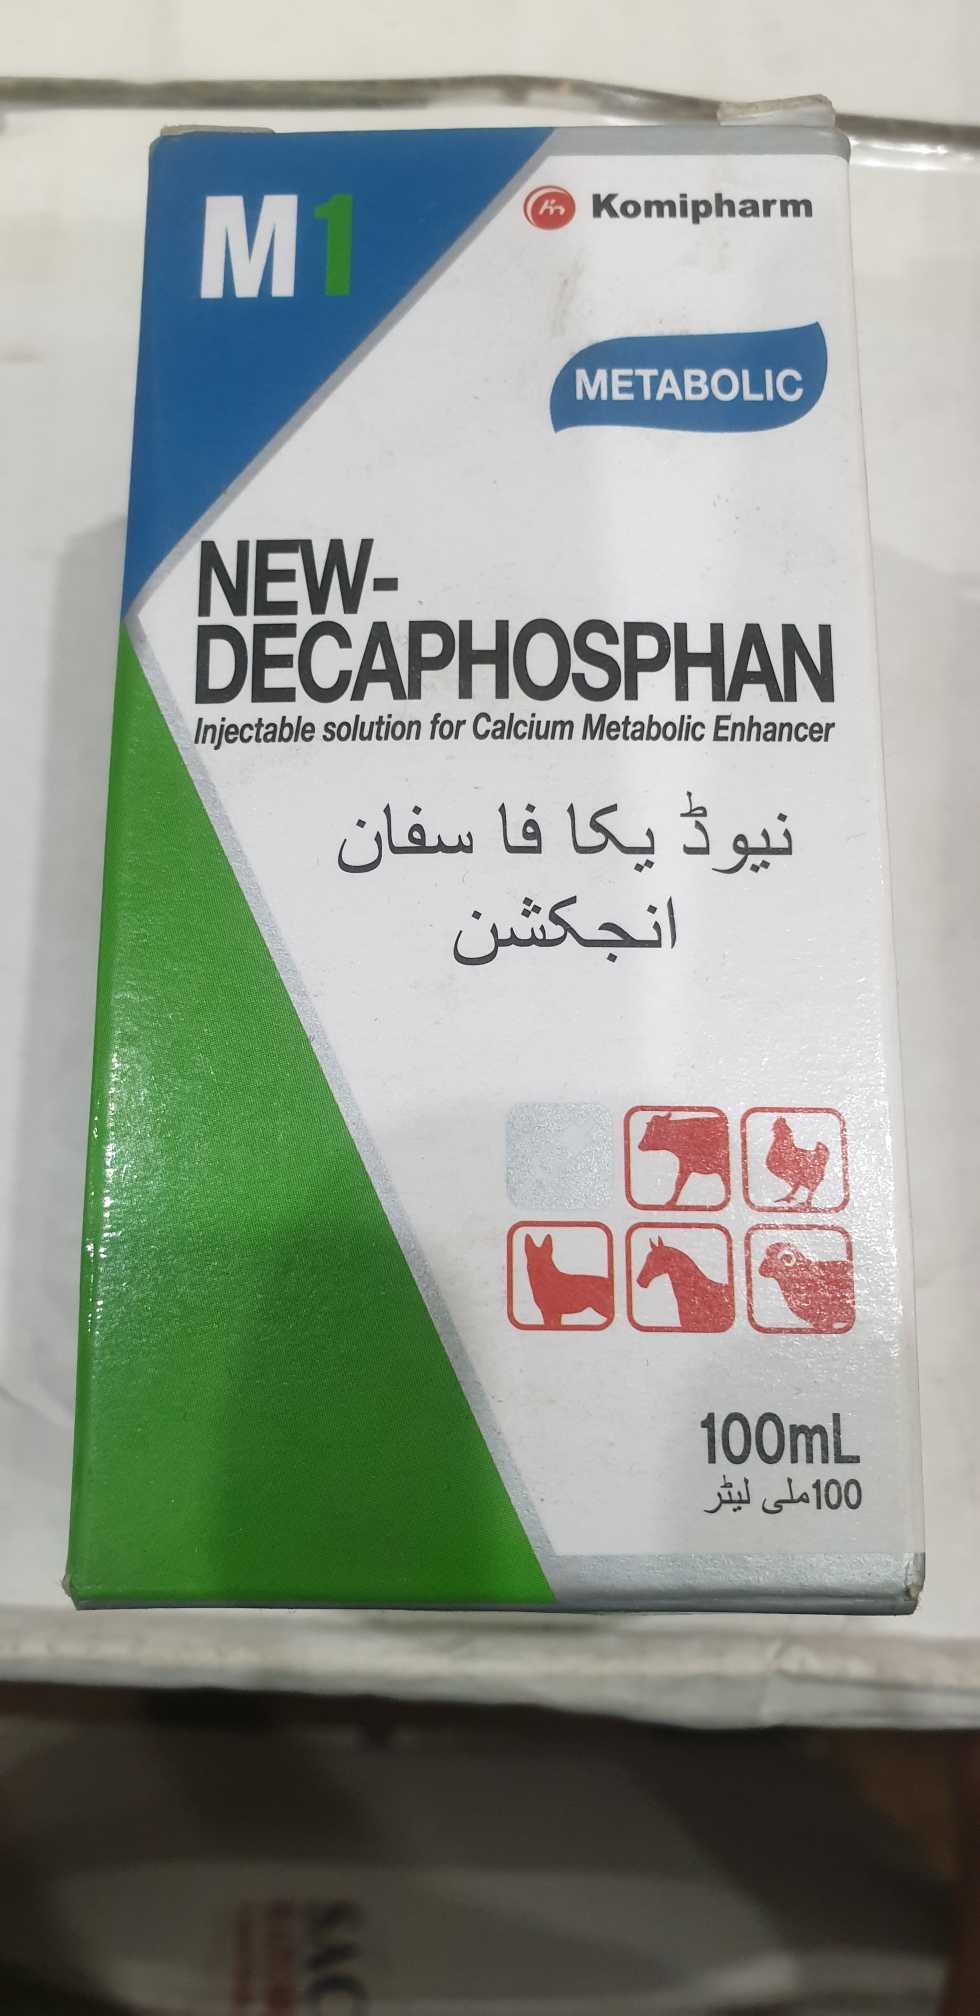 New-Decaphosphan!